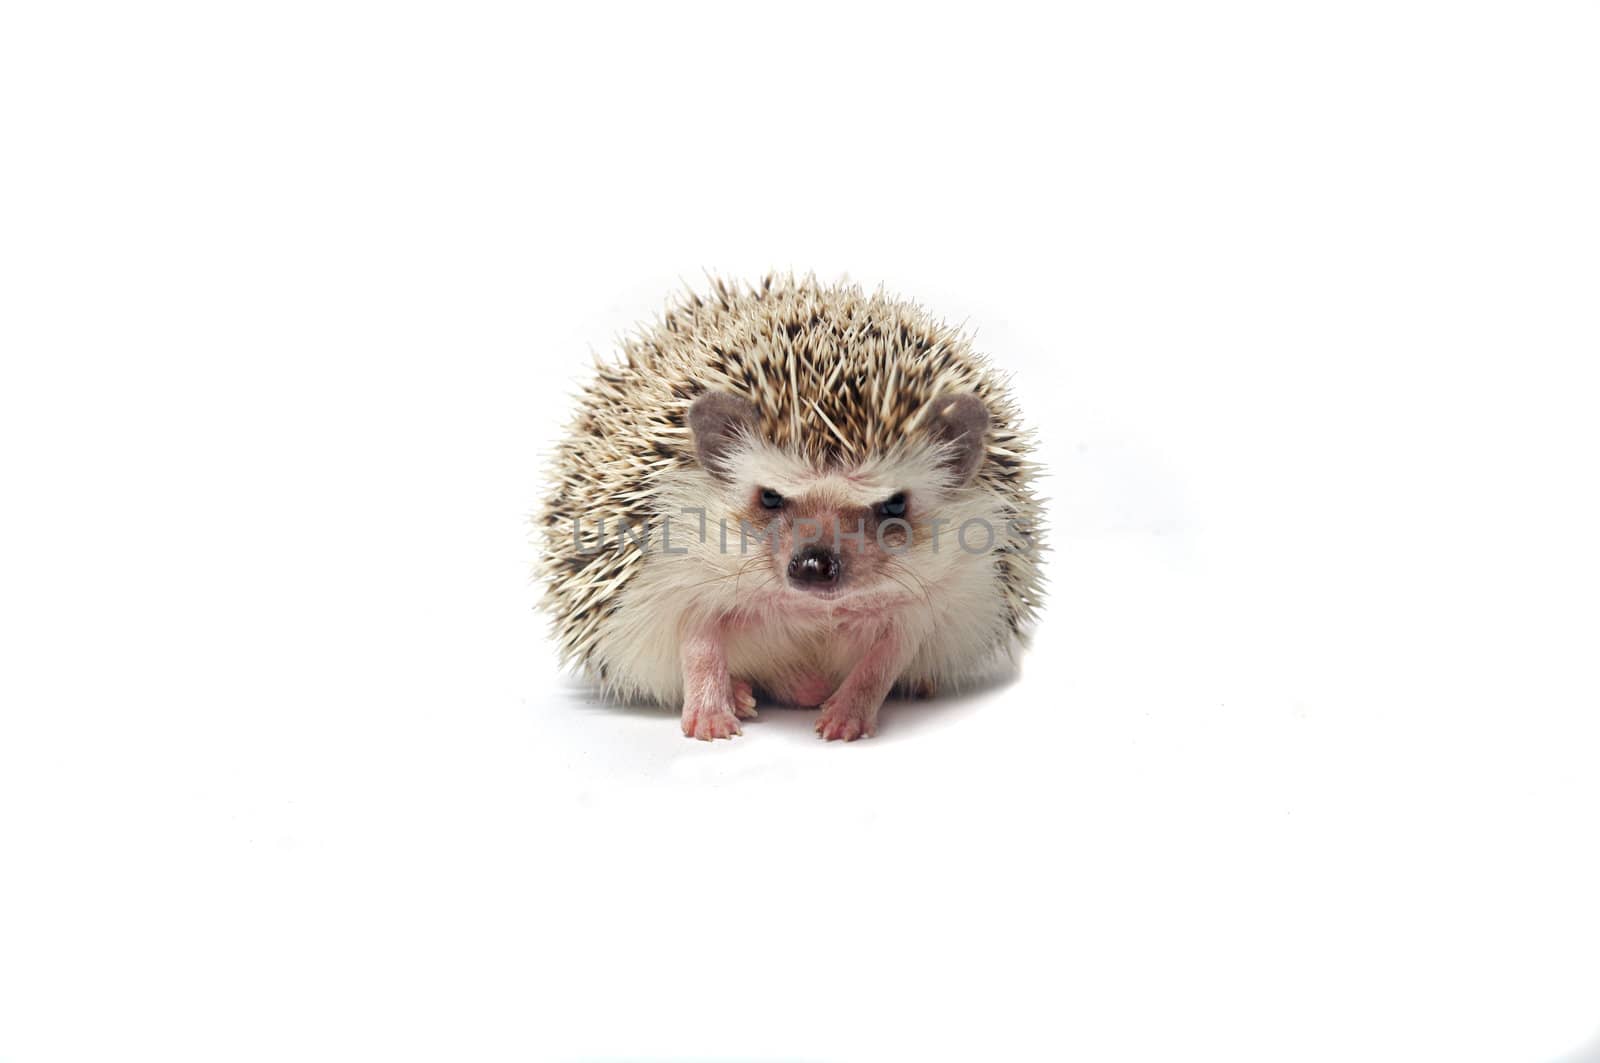 Hedgehog by davidagall